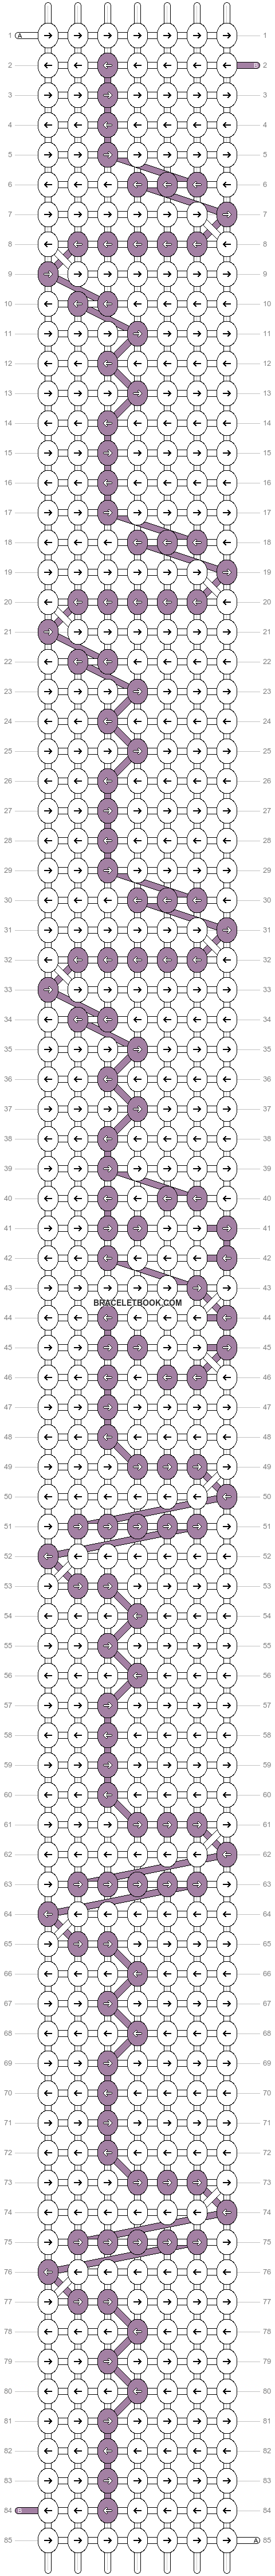 Alpha pattern #45804 pattern